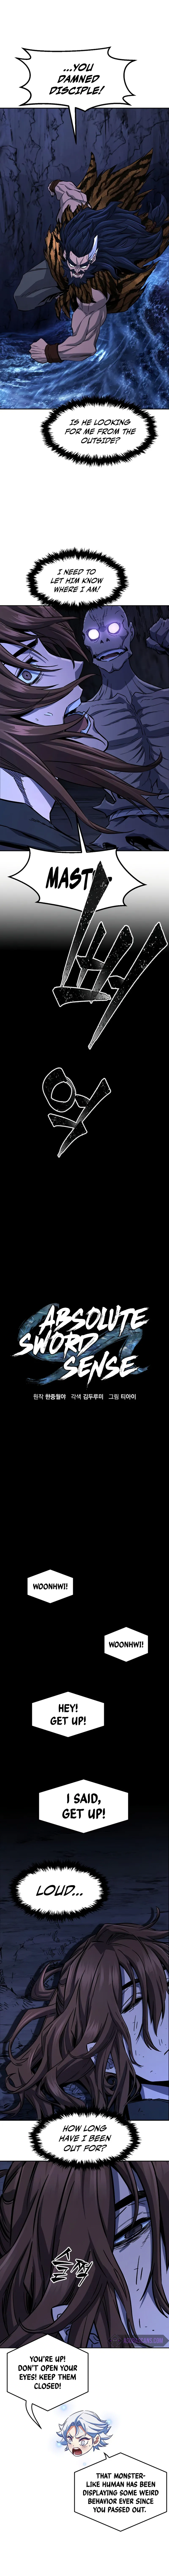 Absolute Sword Sense chapter 49